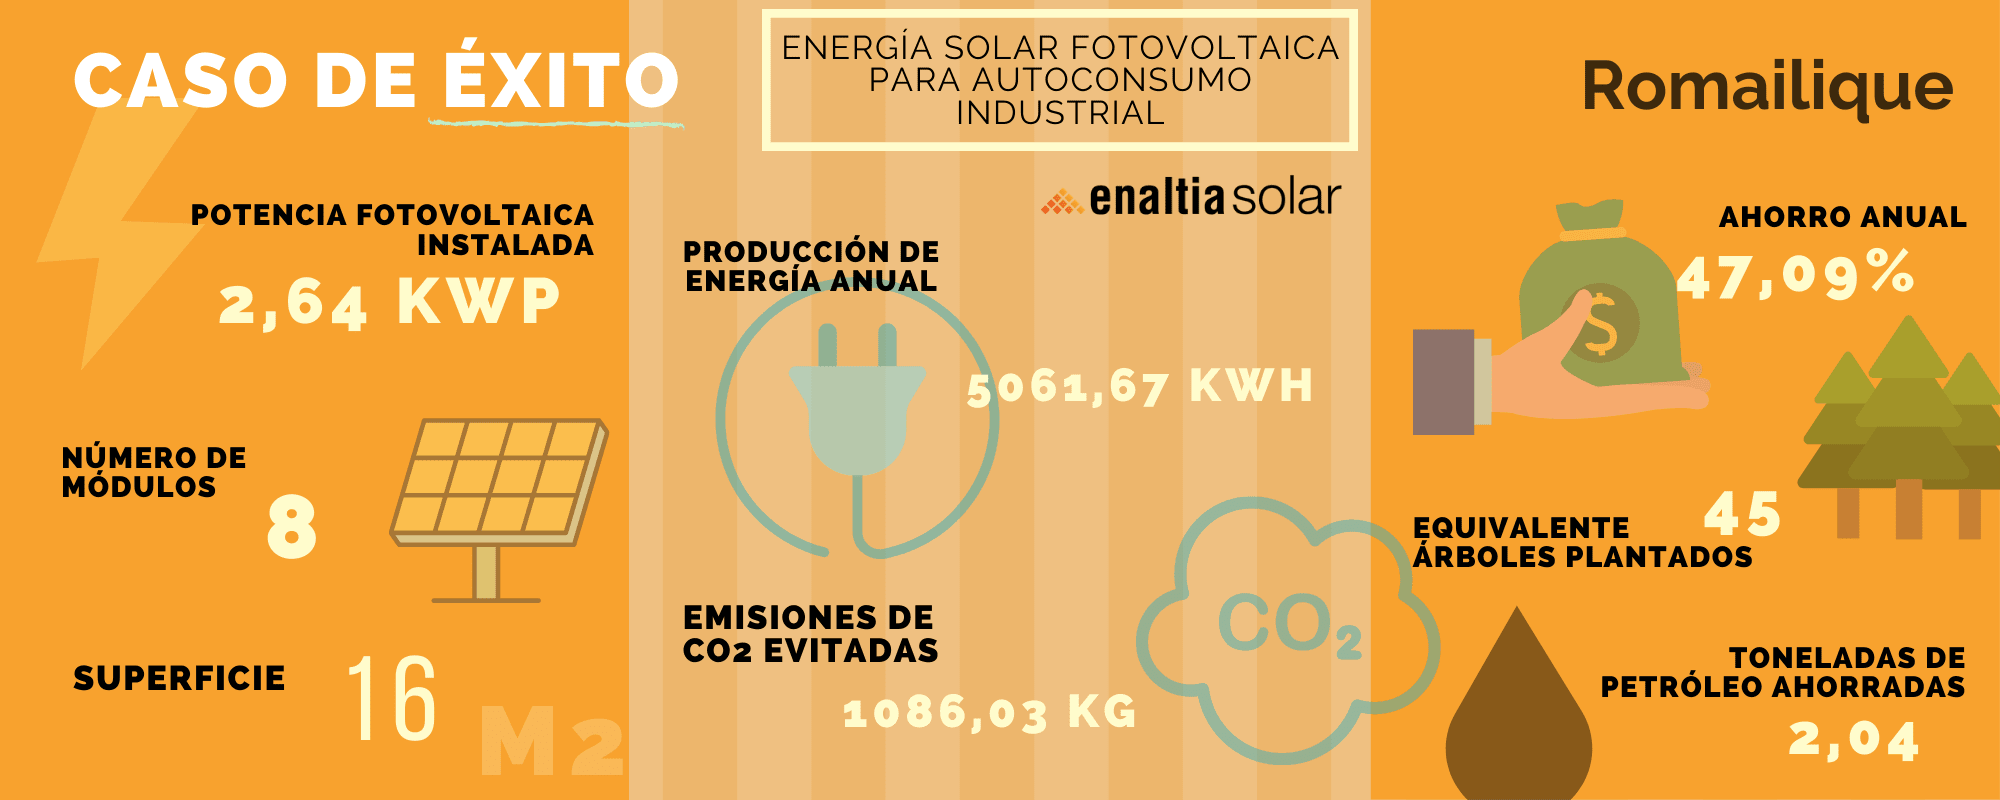 infografia caso de exito instalacion paneles fotovoltaicos autoconsumo industrial romailique